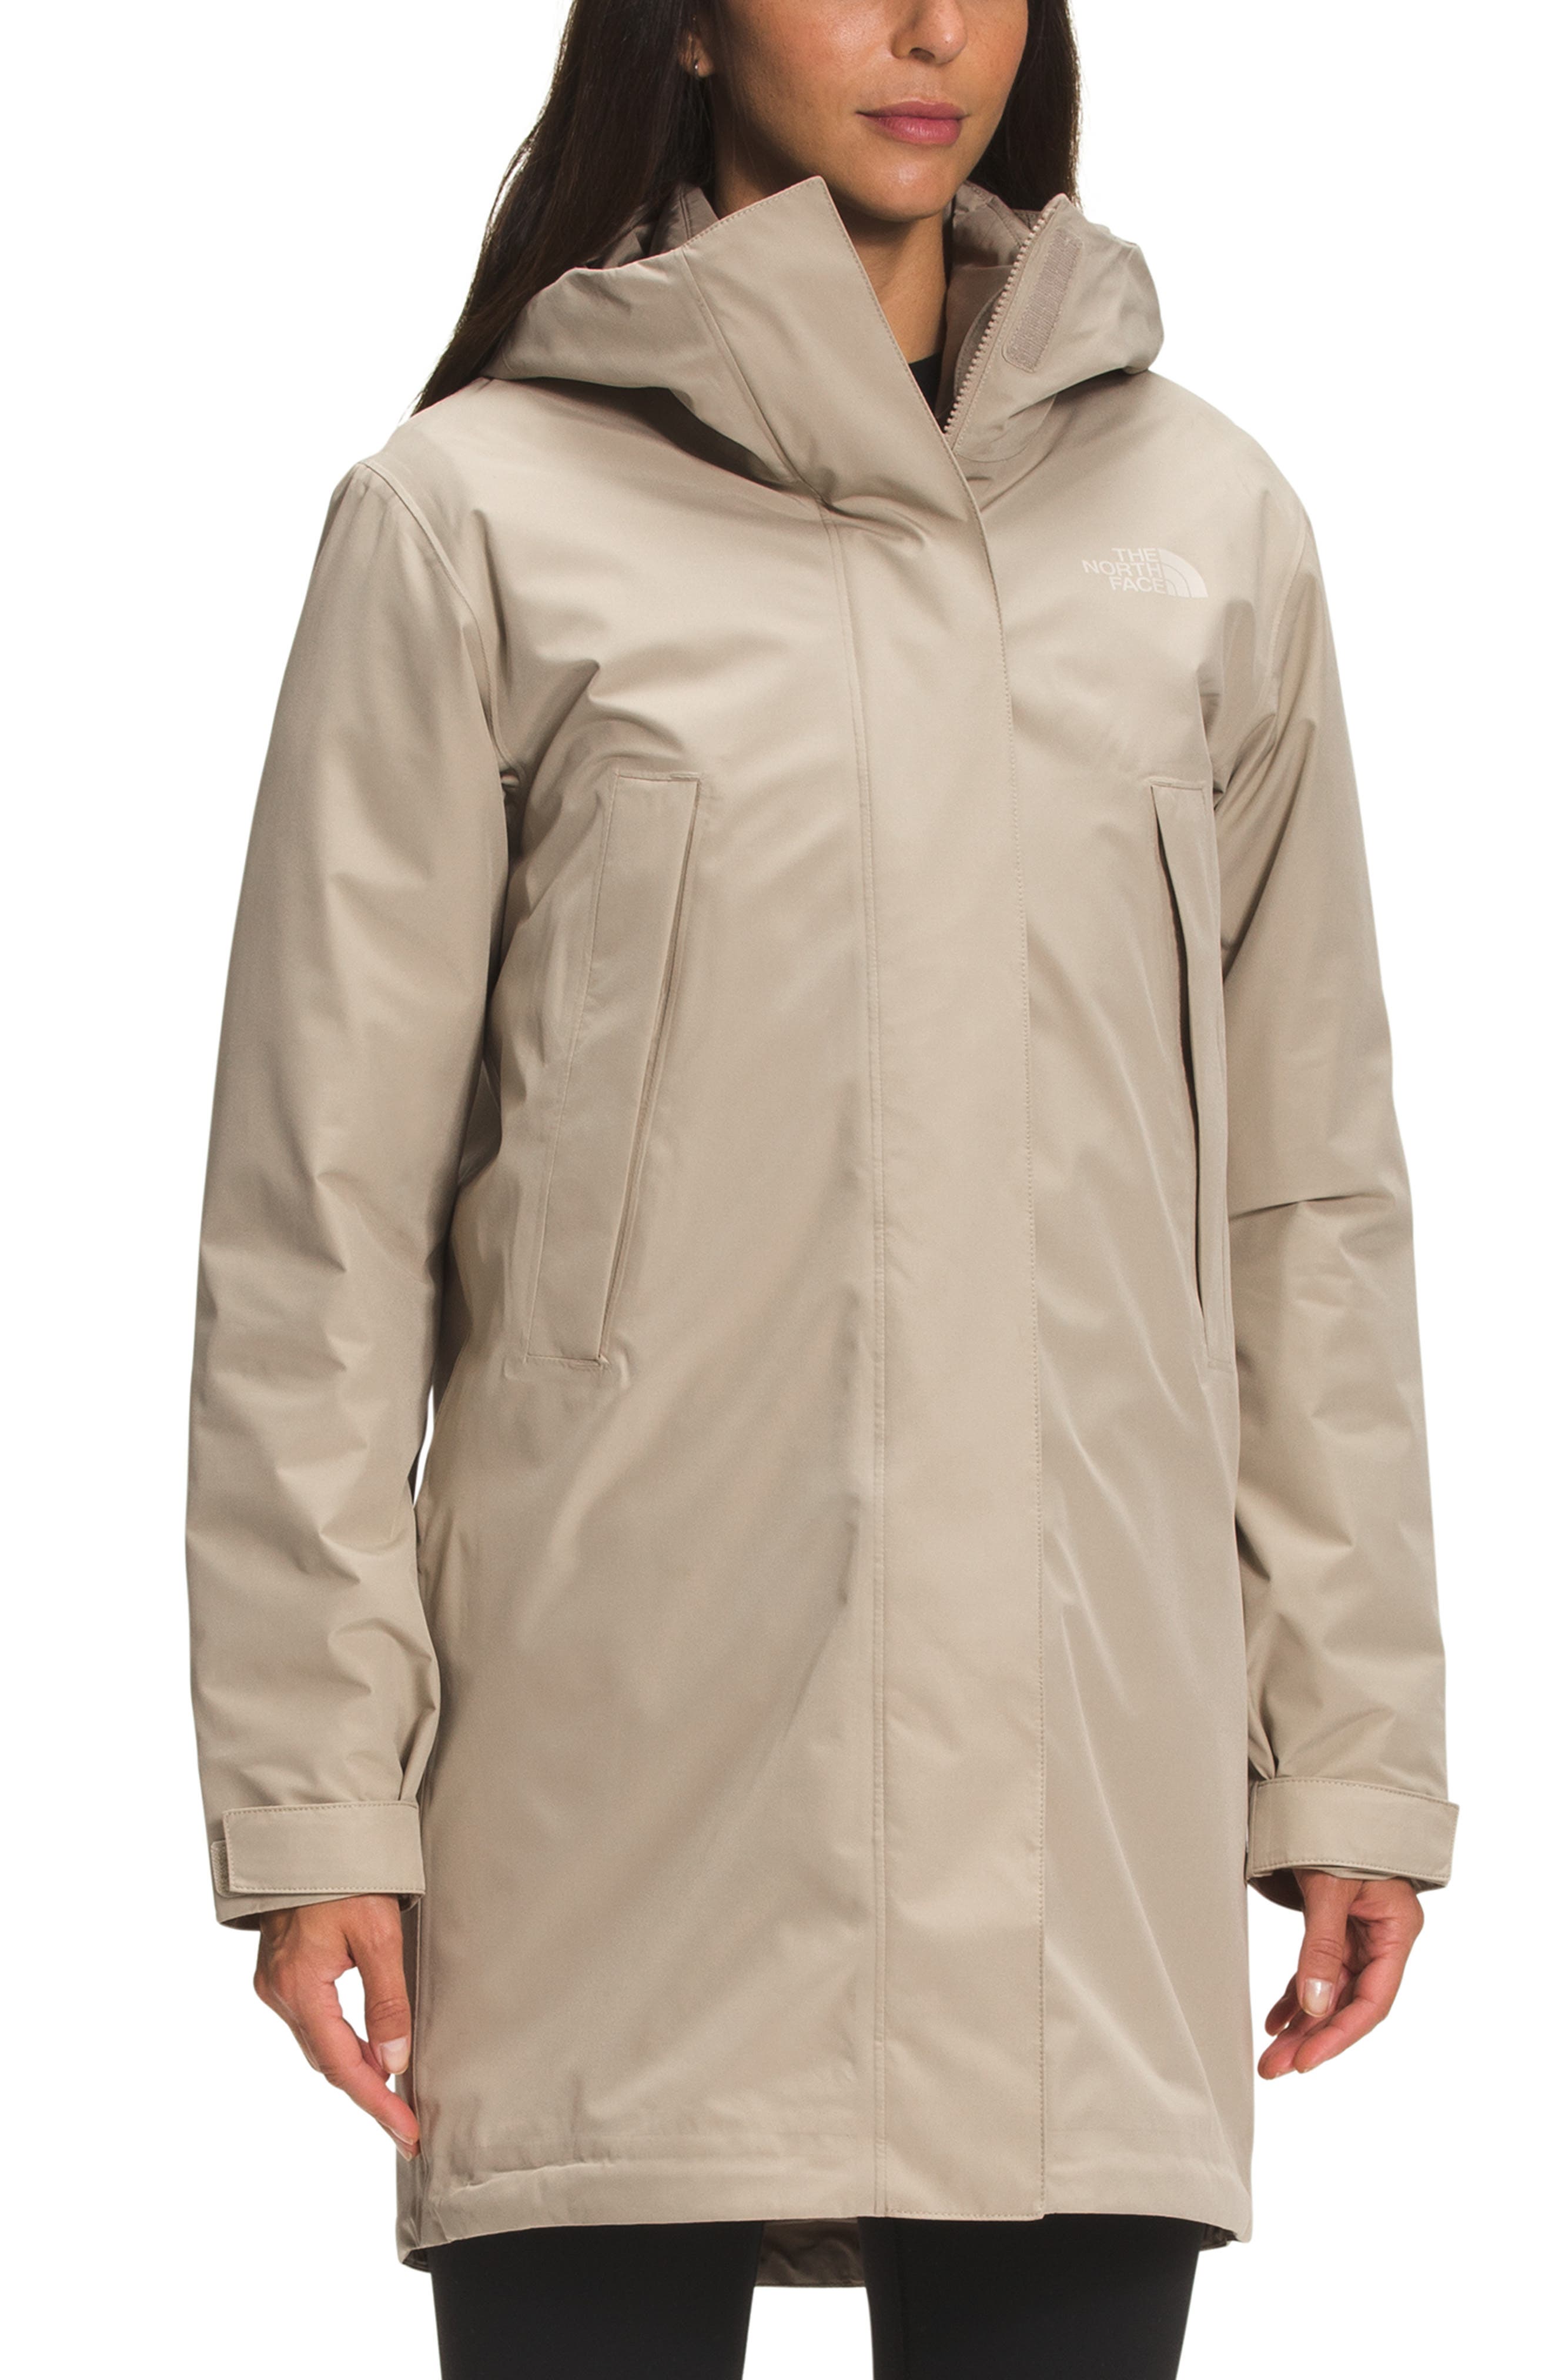 POLAR GLACIER Men/'s Waterproof Insulated Hooded Rain Jacket